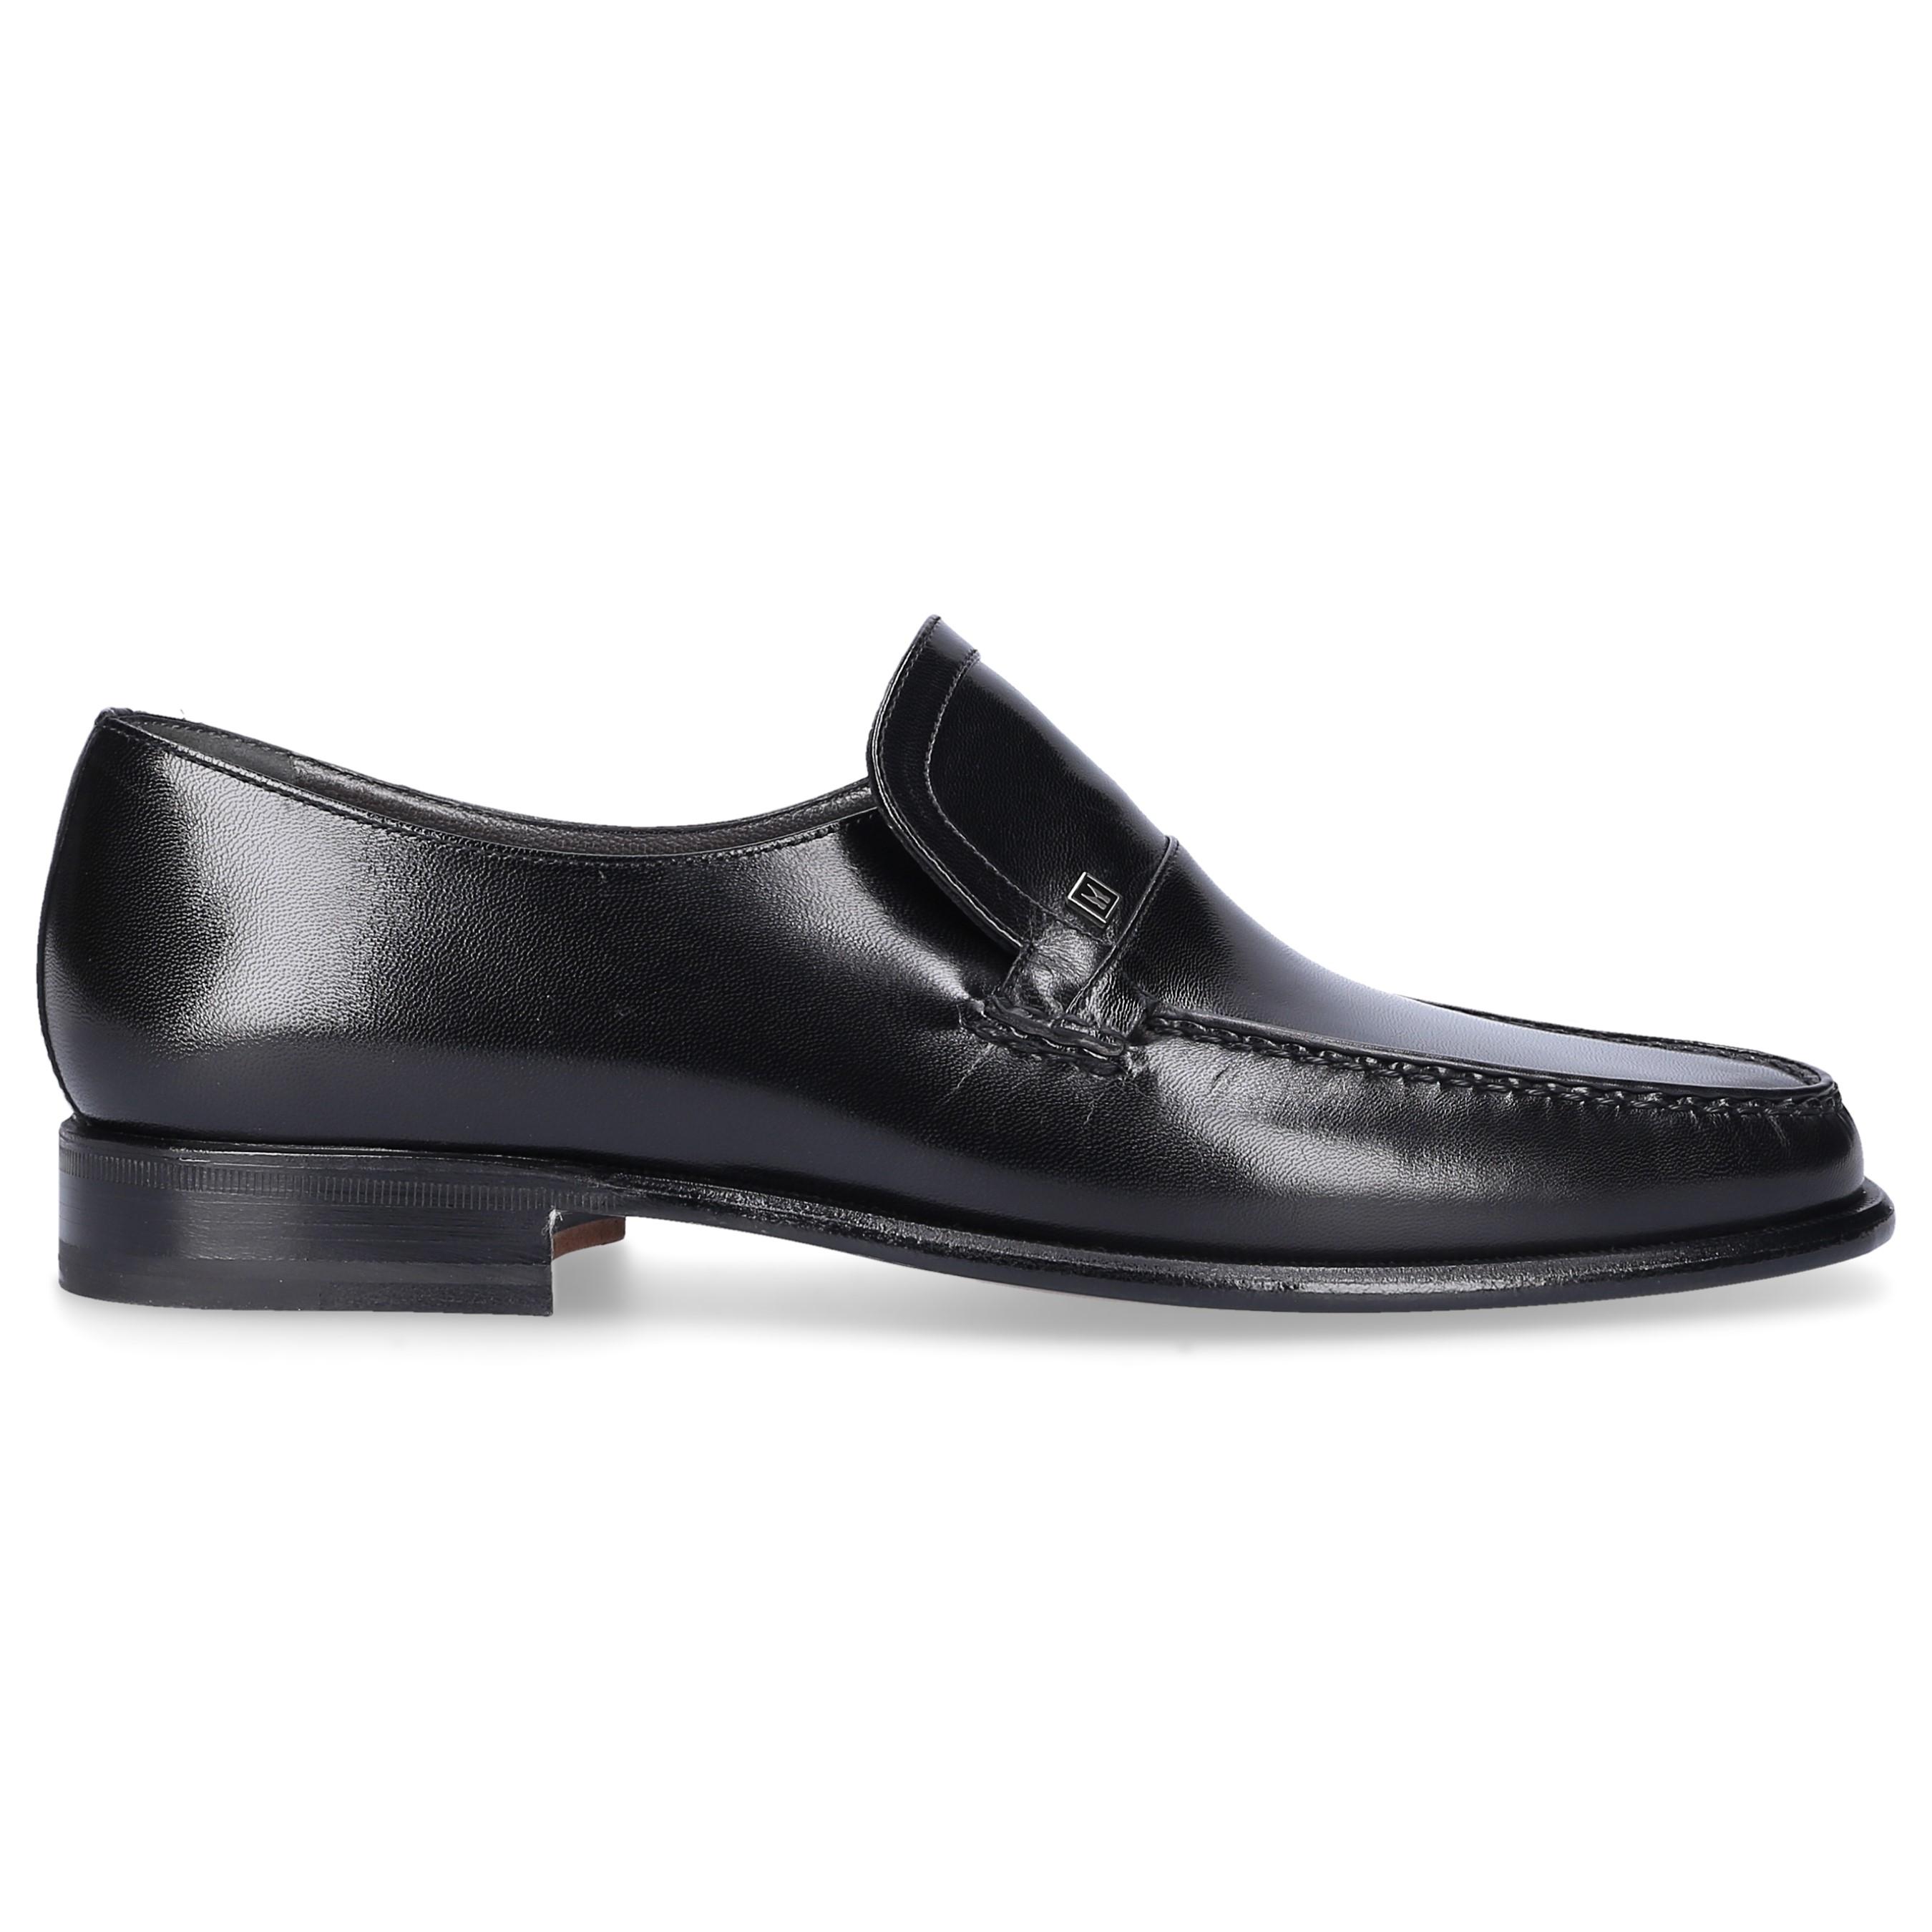 Moreschi Leather Slip-on Shoes in Black for Men - Lyst